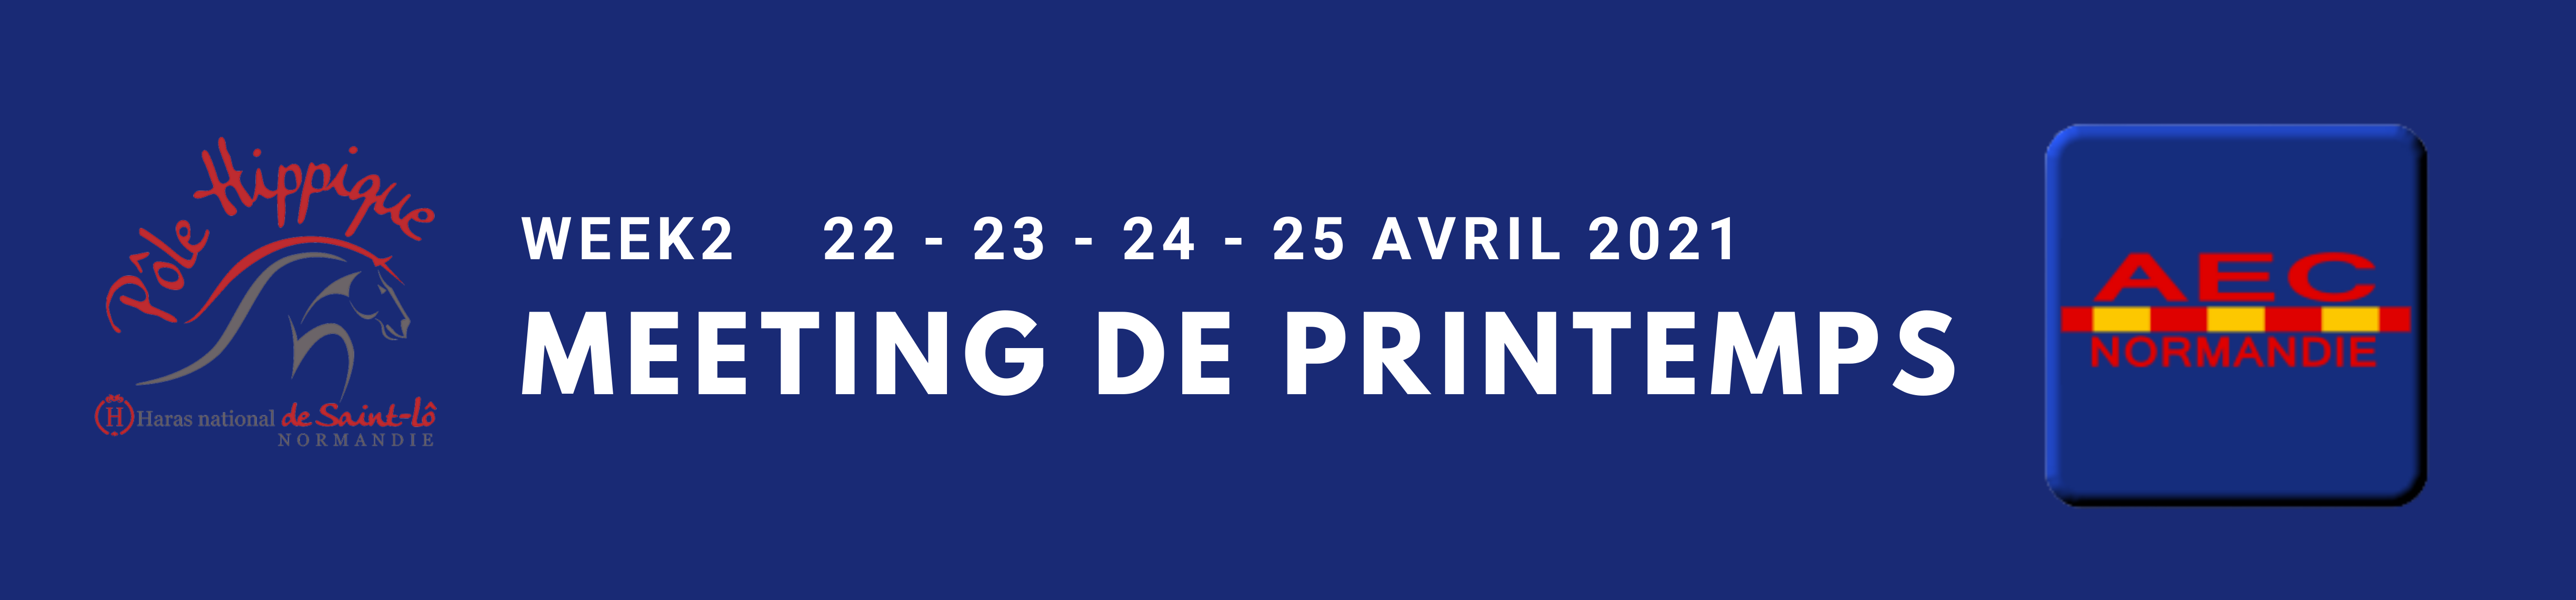 SAINT-LÔ - MEETING DE PRINTEMPS - PRO1 / TOP7 / 22/04/2021 - 25/04/2021